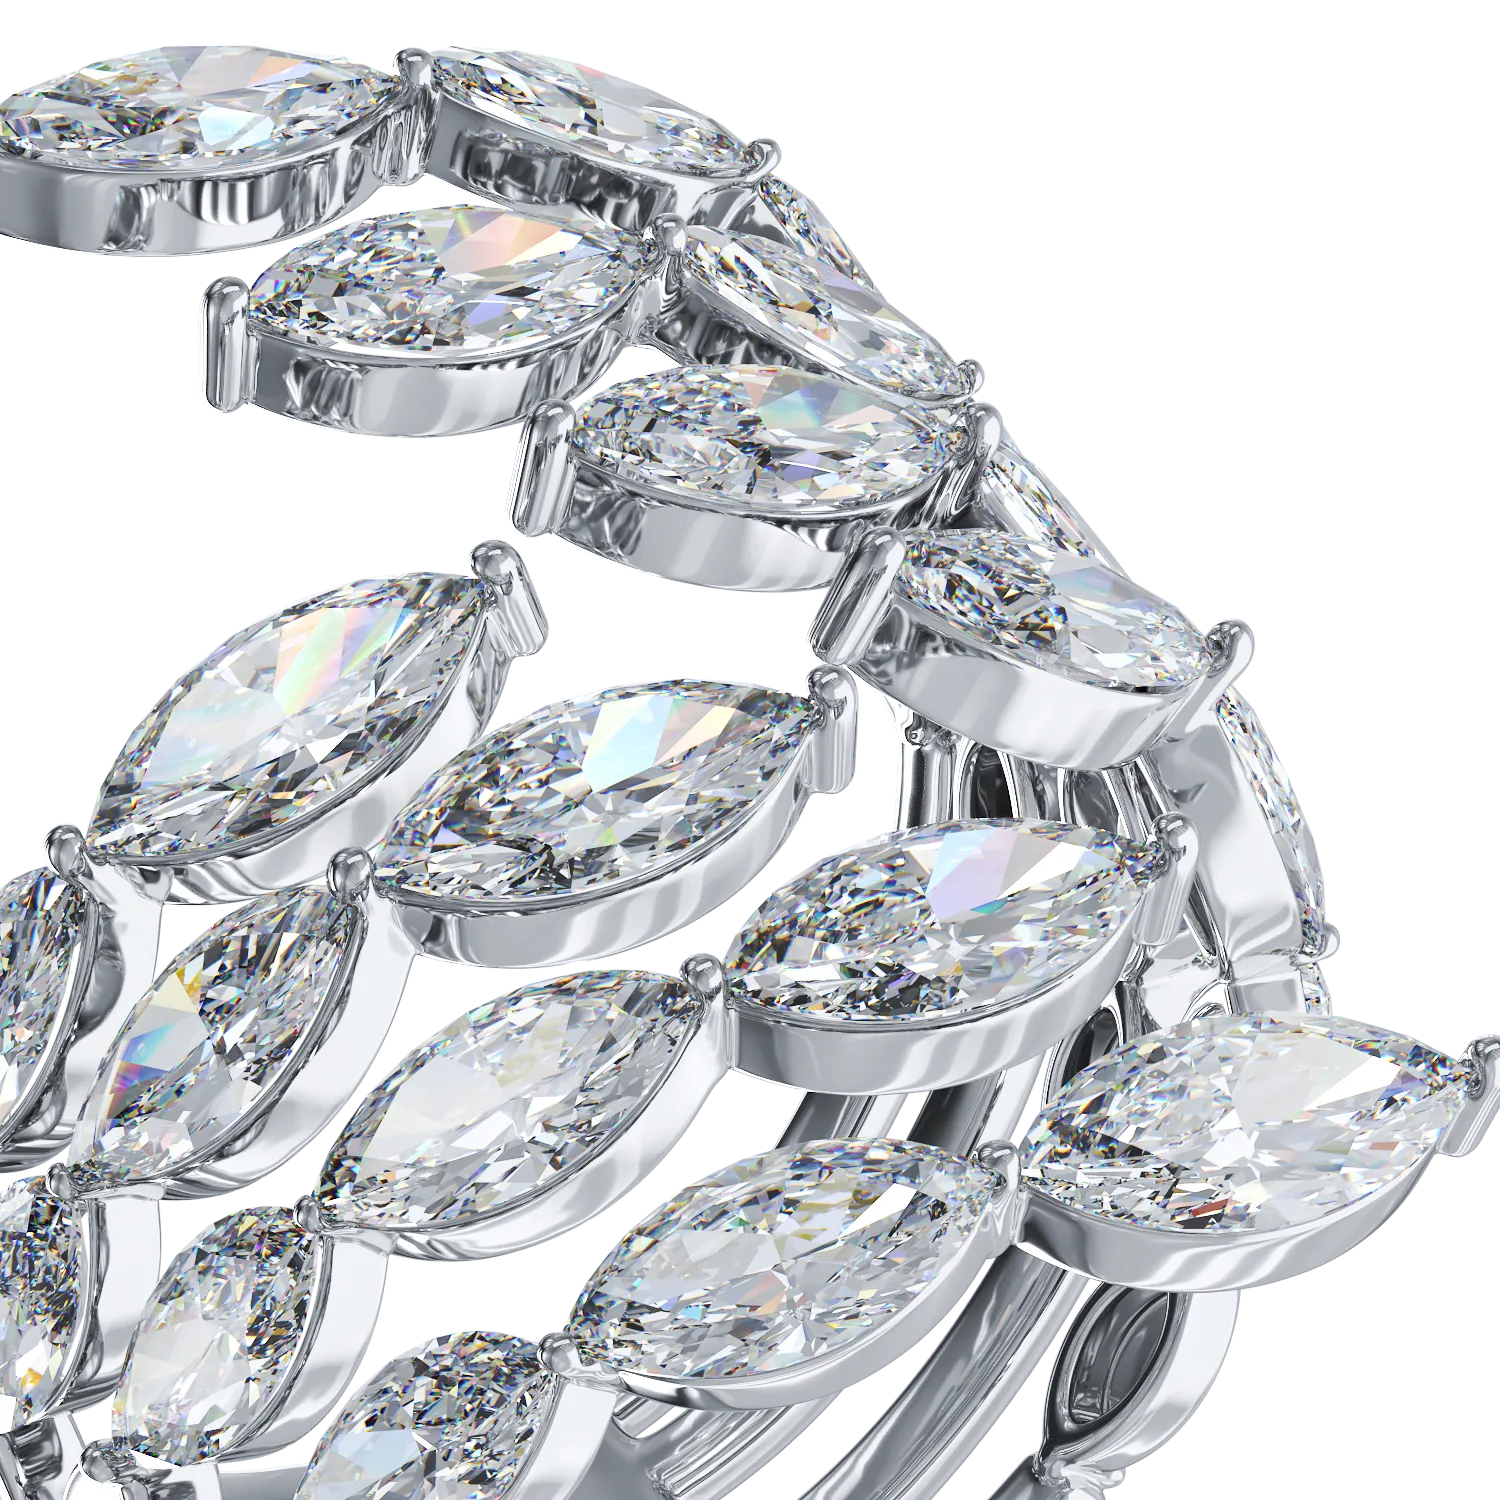 Inel din aur alb de 18K cu diamante de 2.56ct